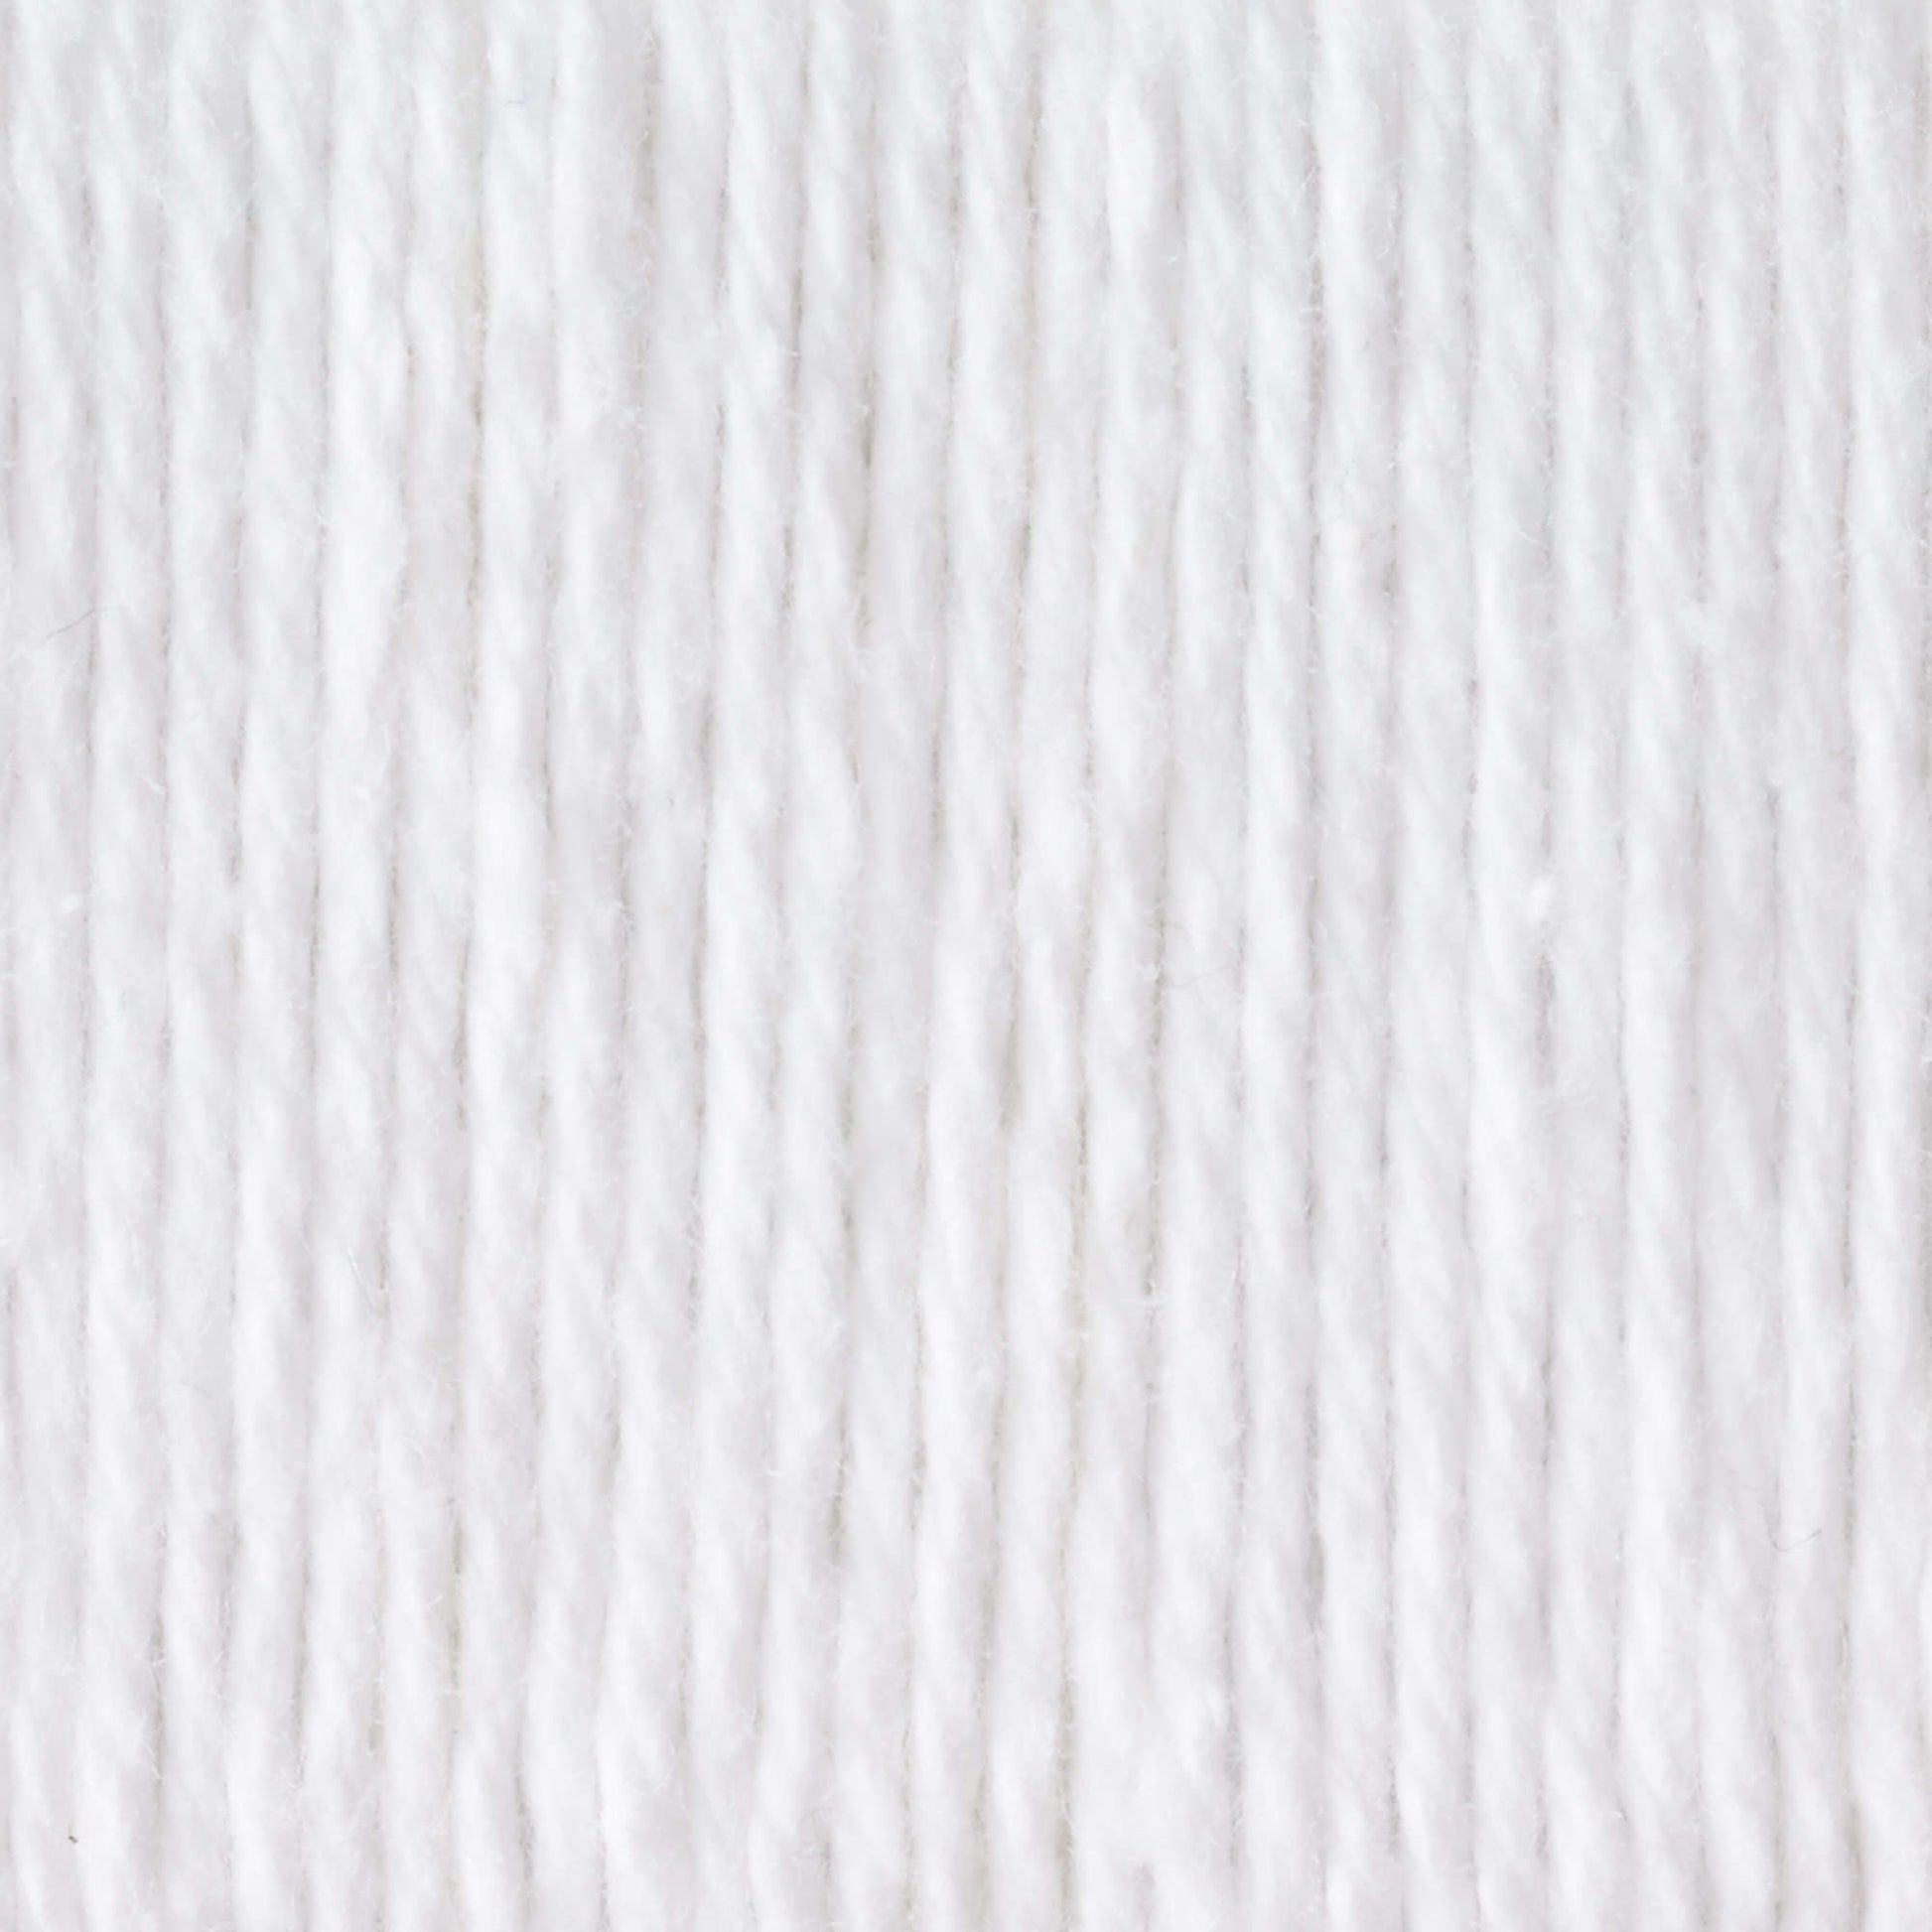 Bernat Handicrafter Cotton Yarn (400g/14oz) - Discontinued Shades White